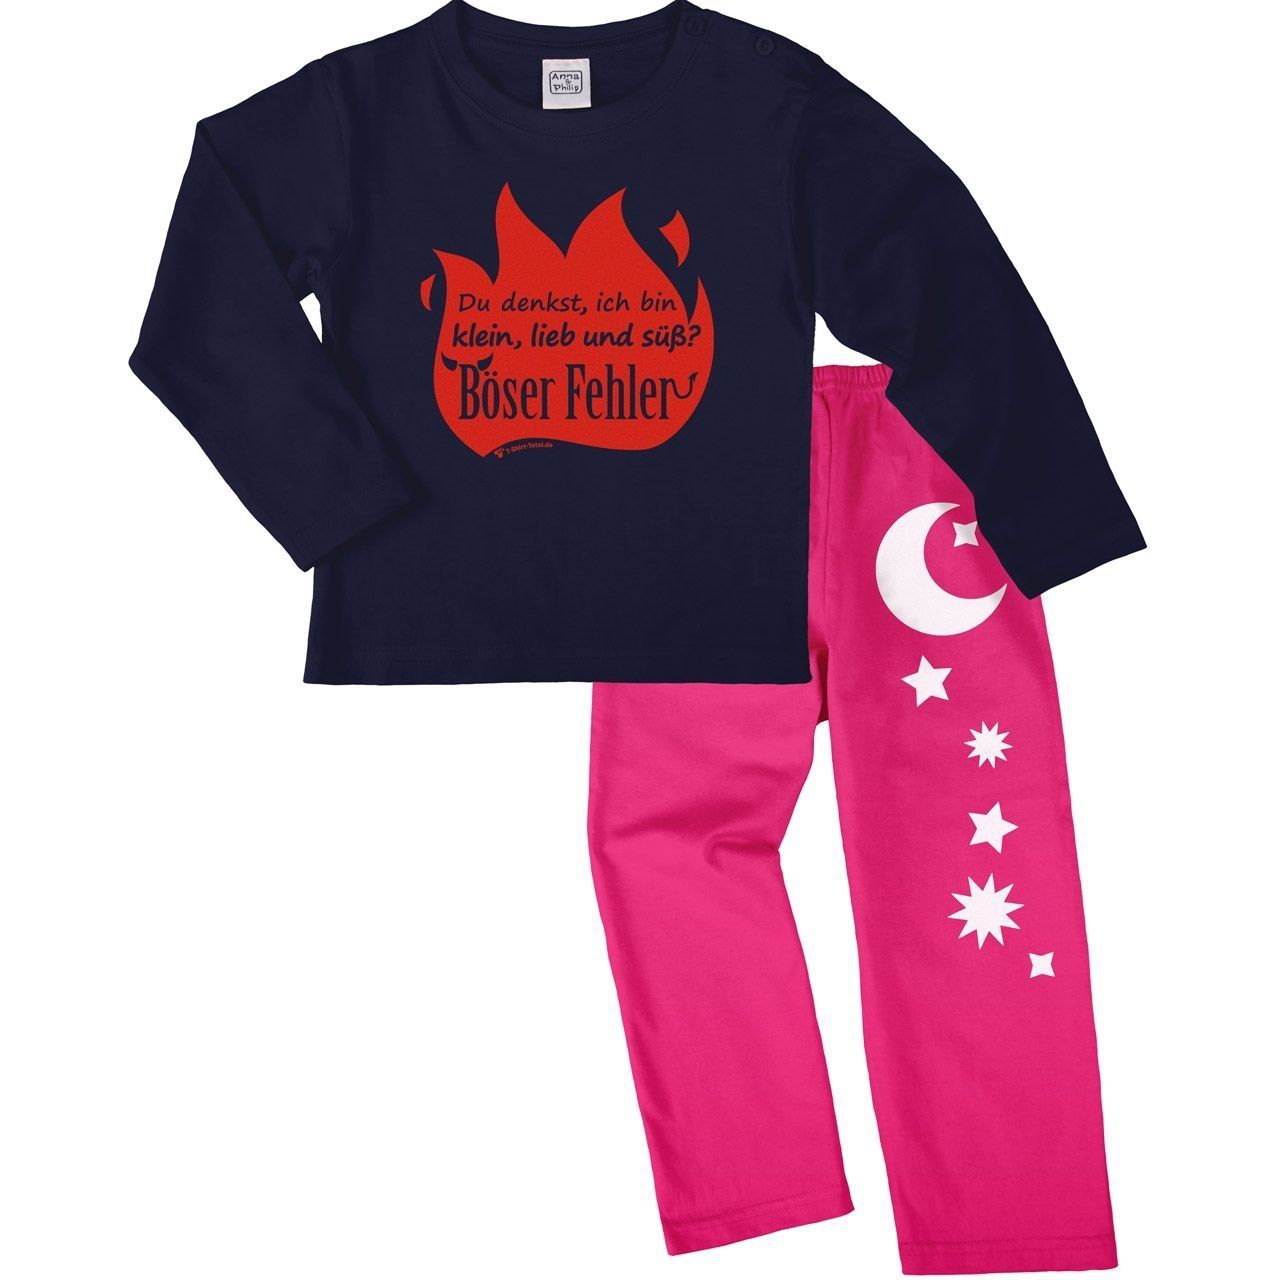 Böser Fehler Pyjama Set navy / pink 92